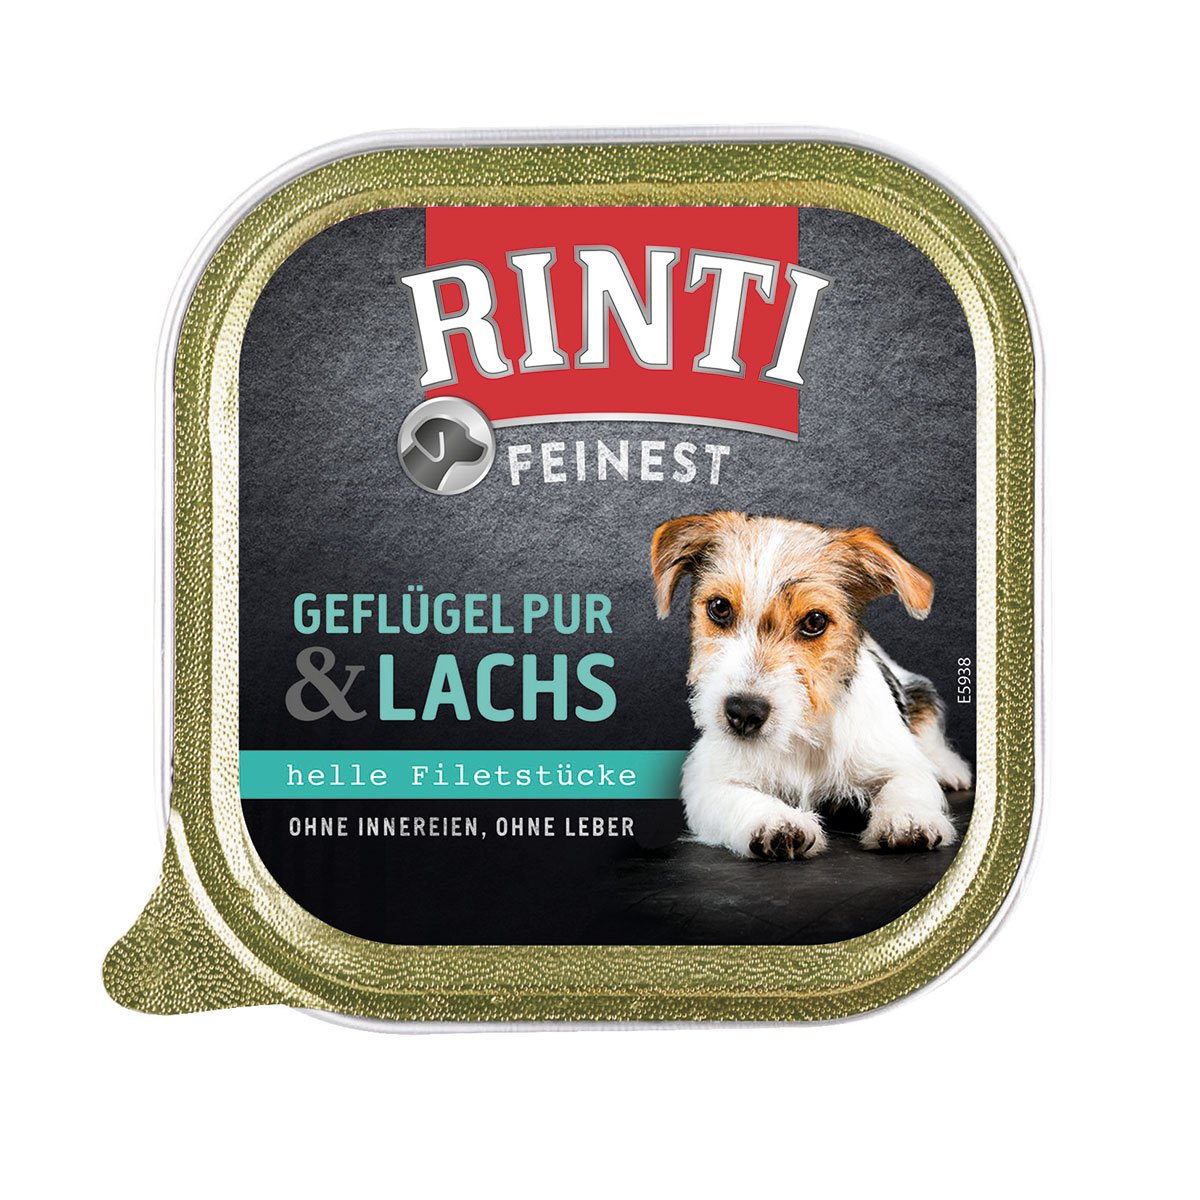 Rinti Feinest Geflügel pur & Lachs 11x150g